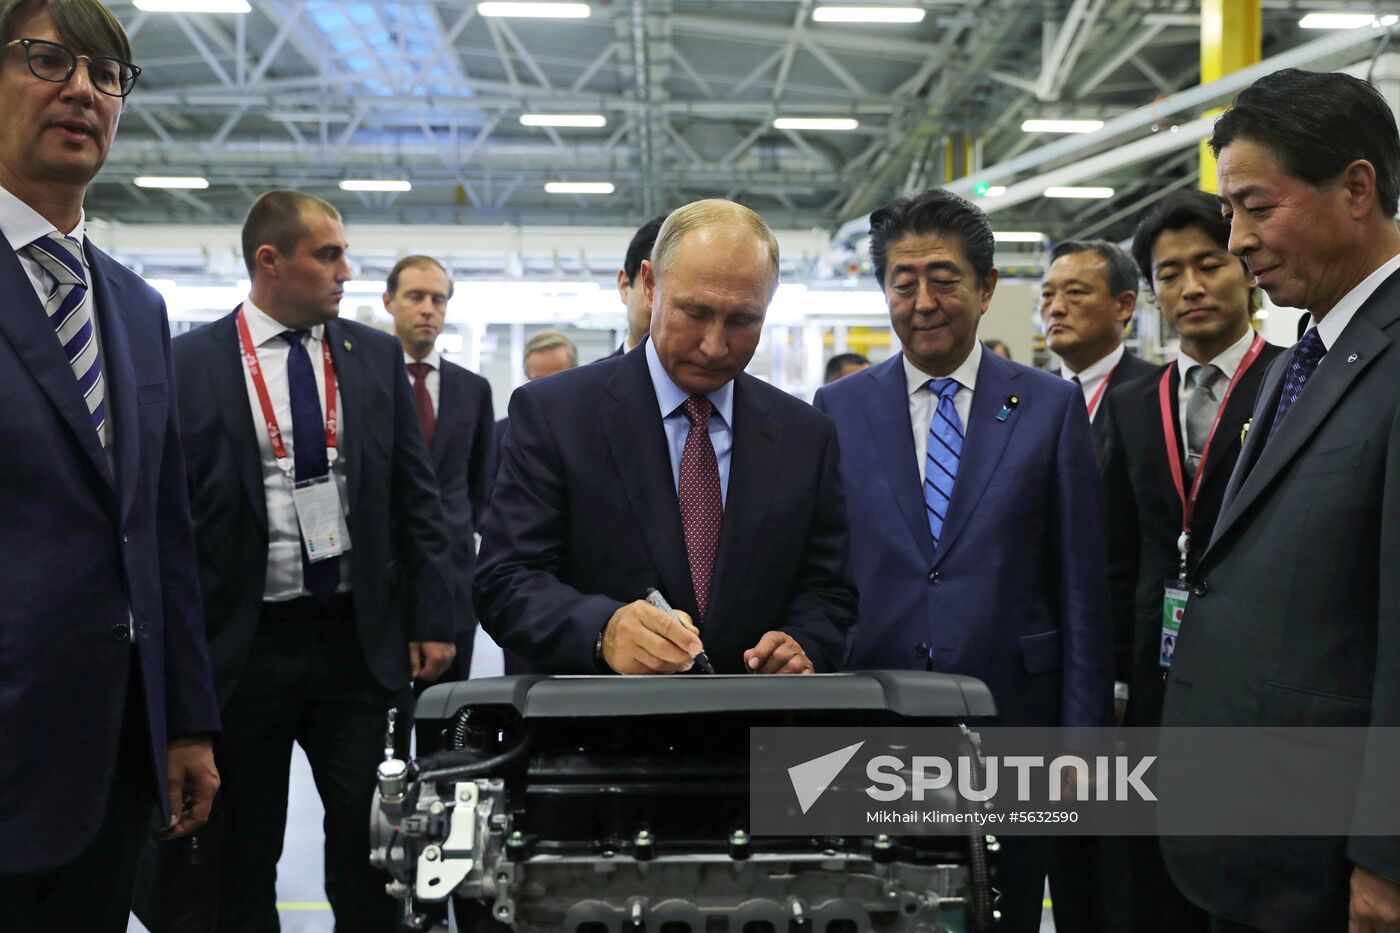 President Putin's working trip to Far Eastern Federal District